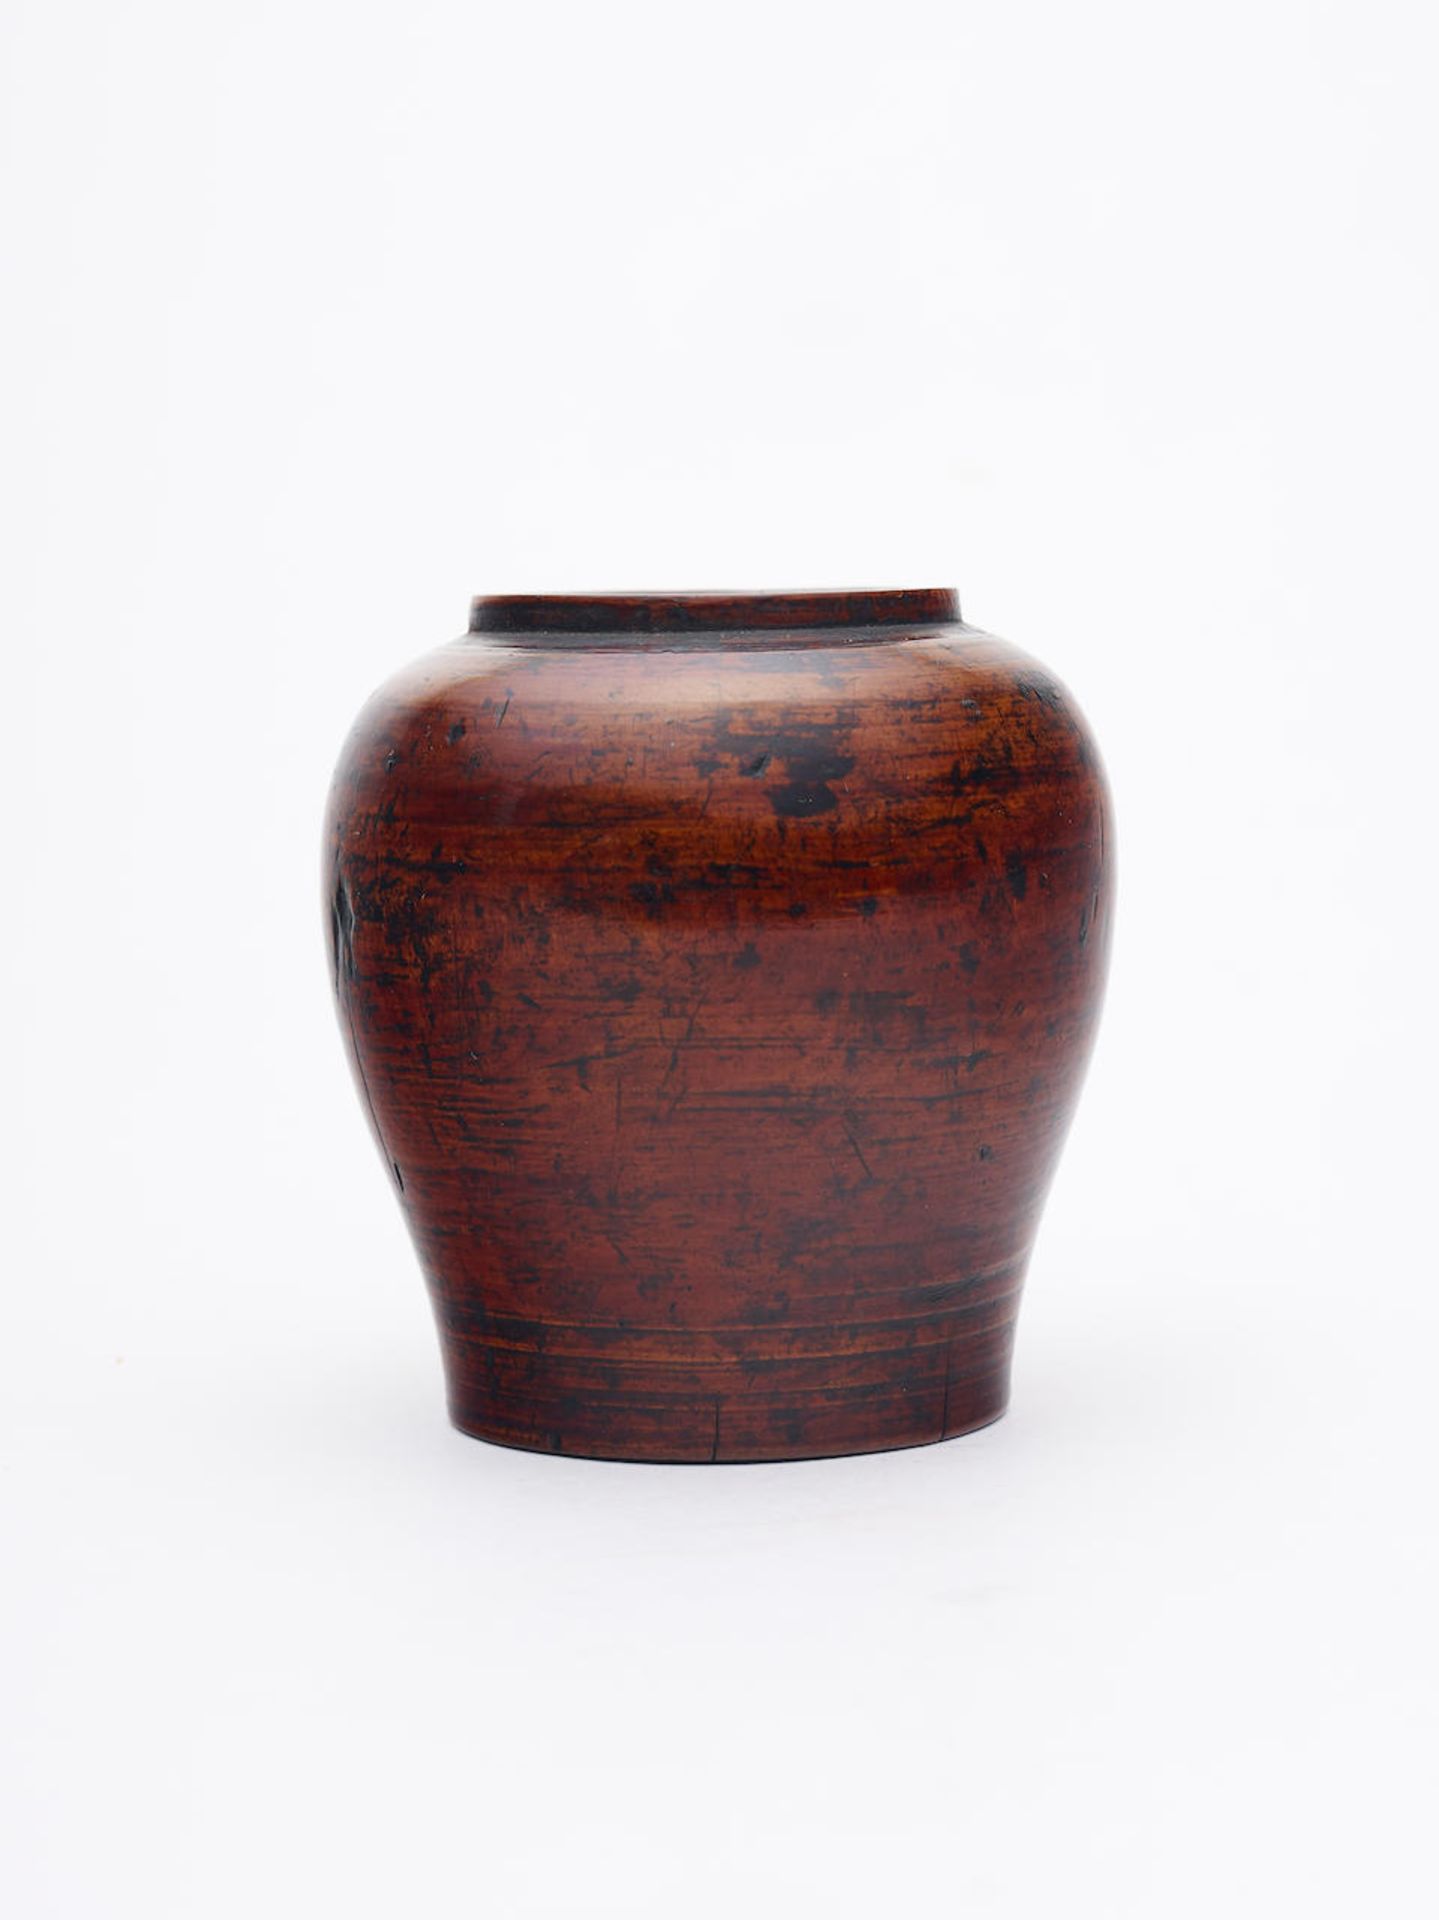 A small boxwood jar